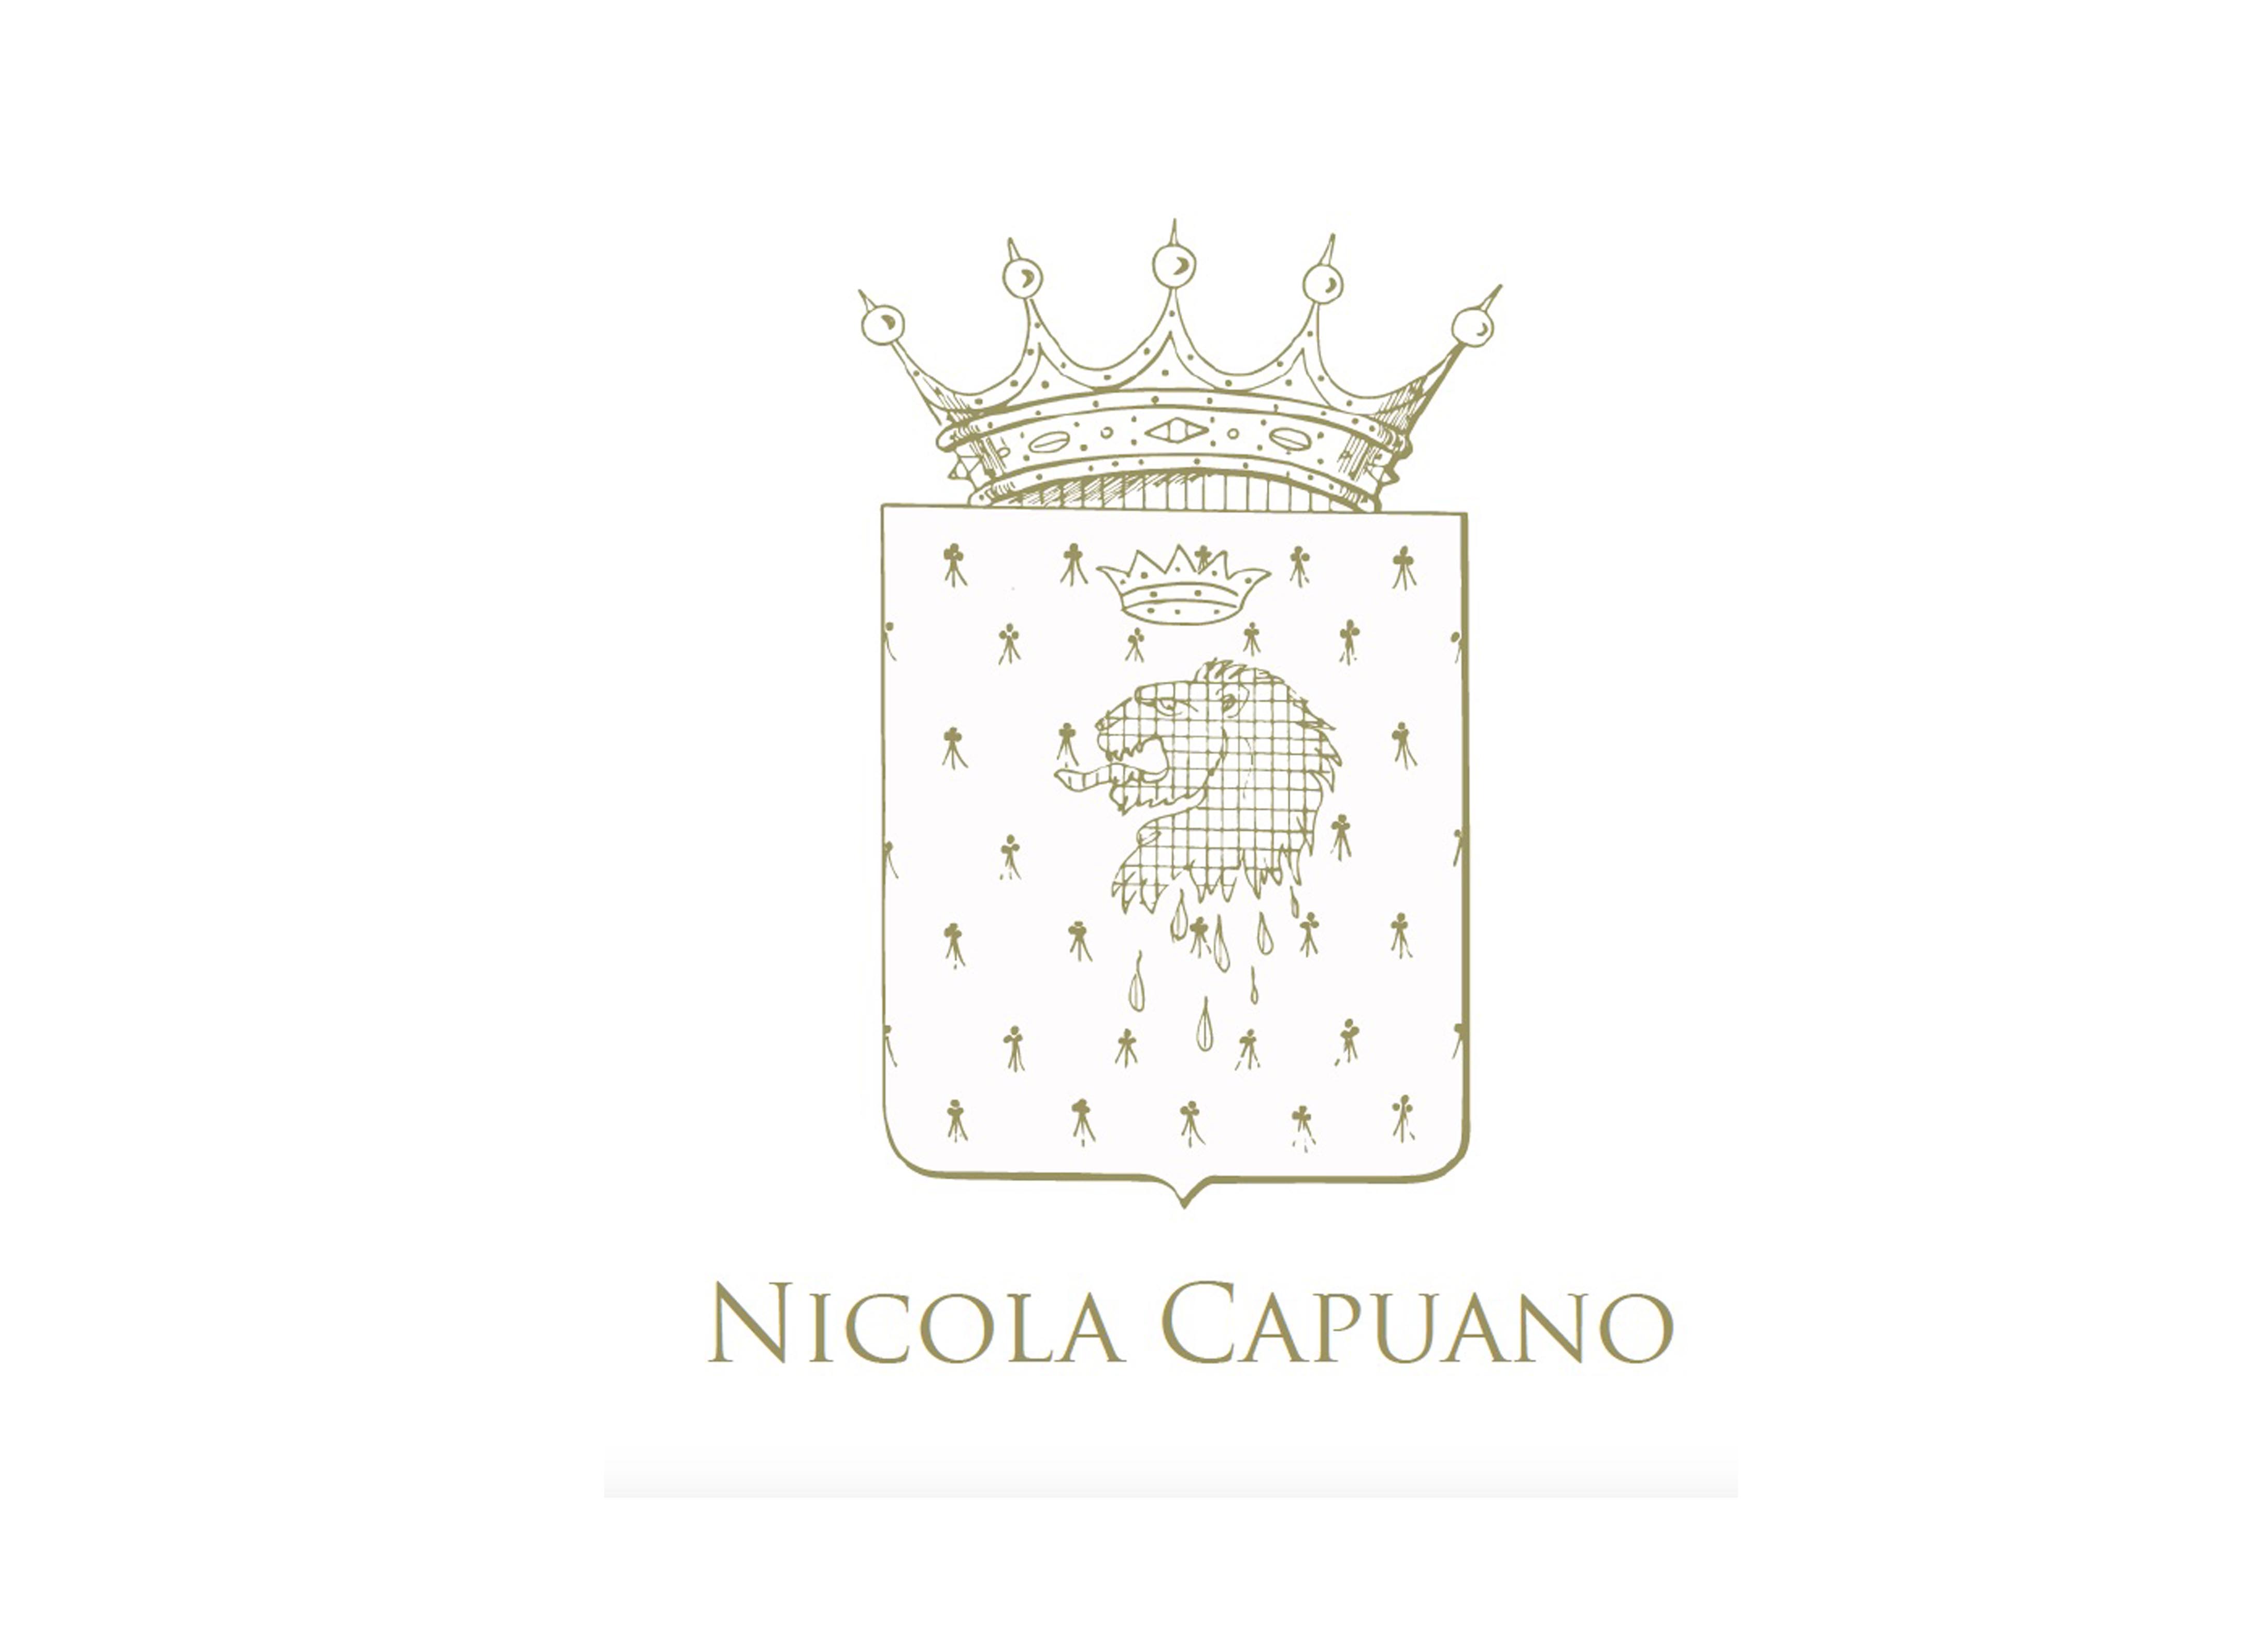 Nicola Capuano sas